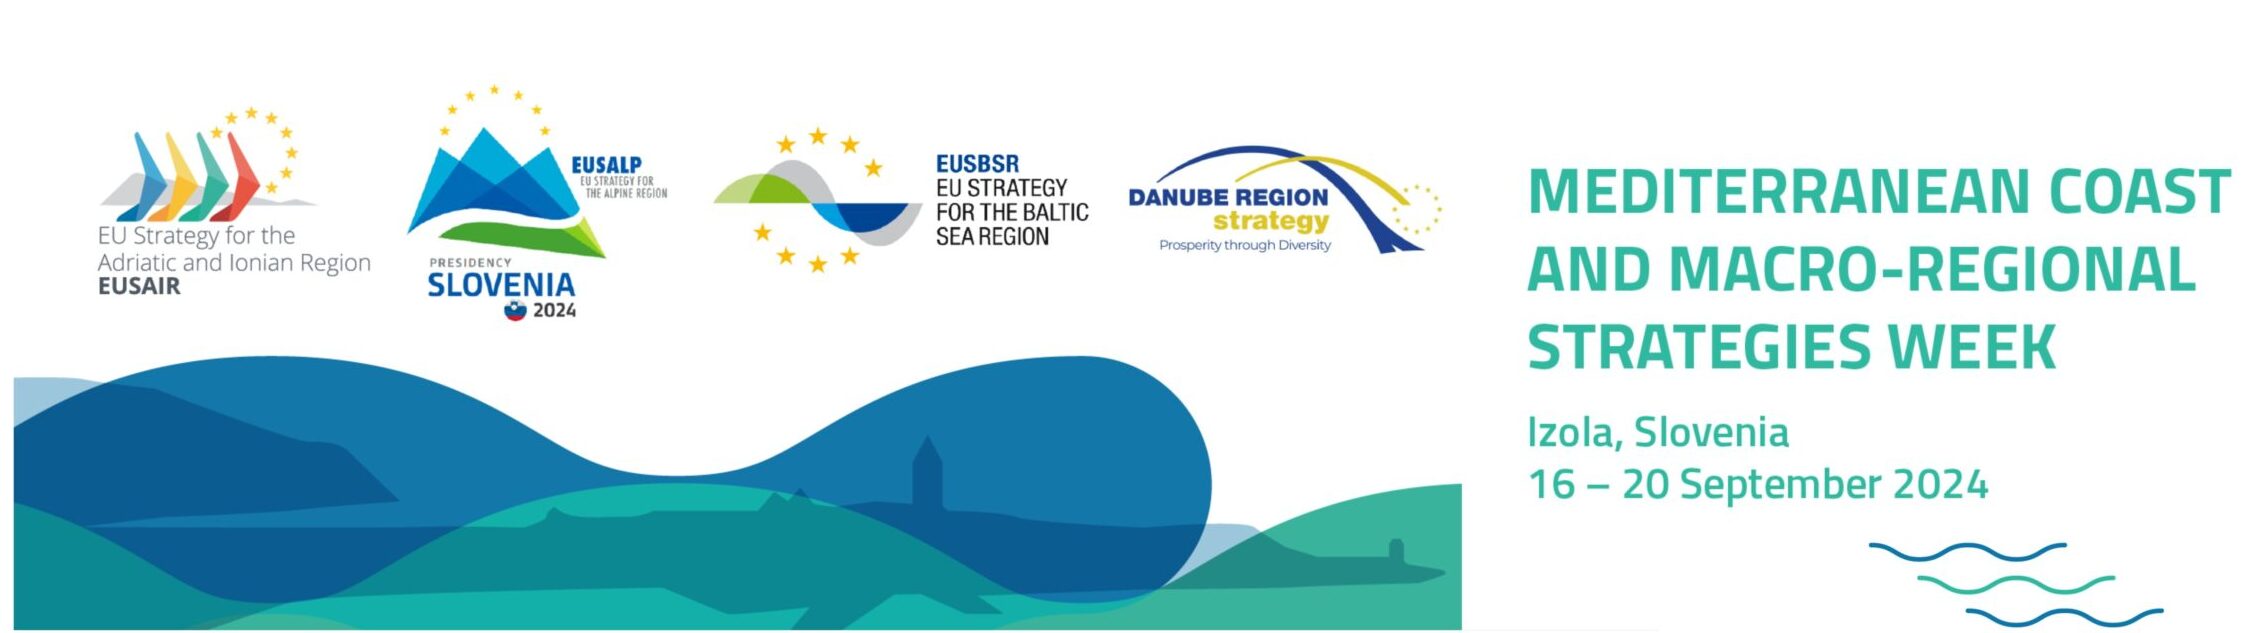 SAVE THE DATE! Mediterranean Coast and Macro-Regional Strategies Week, Izola, Slovenia, 16 – 20 September 2024